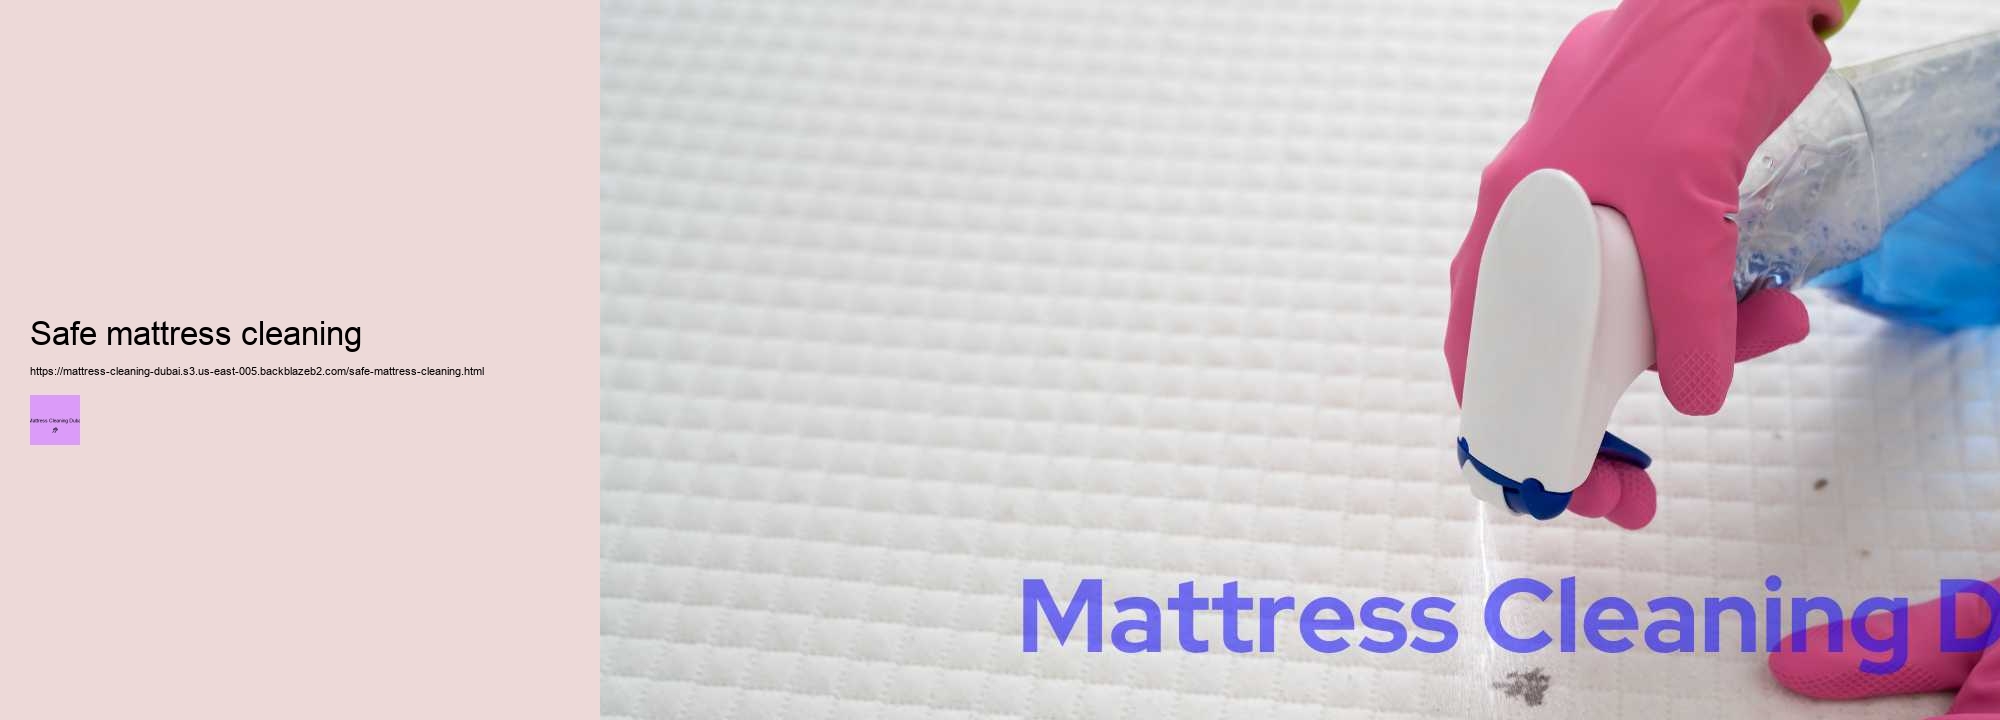 Safe mattress cleaning